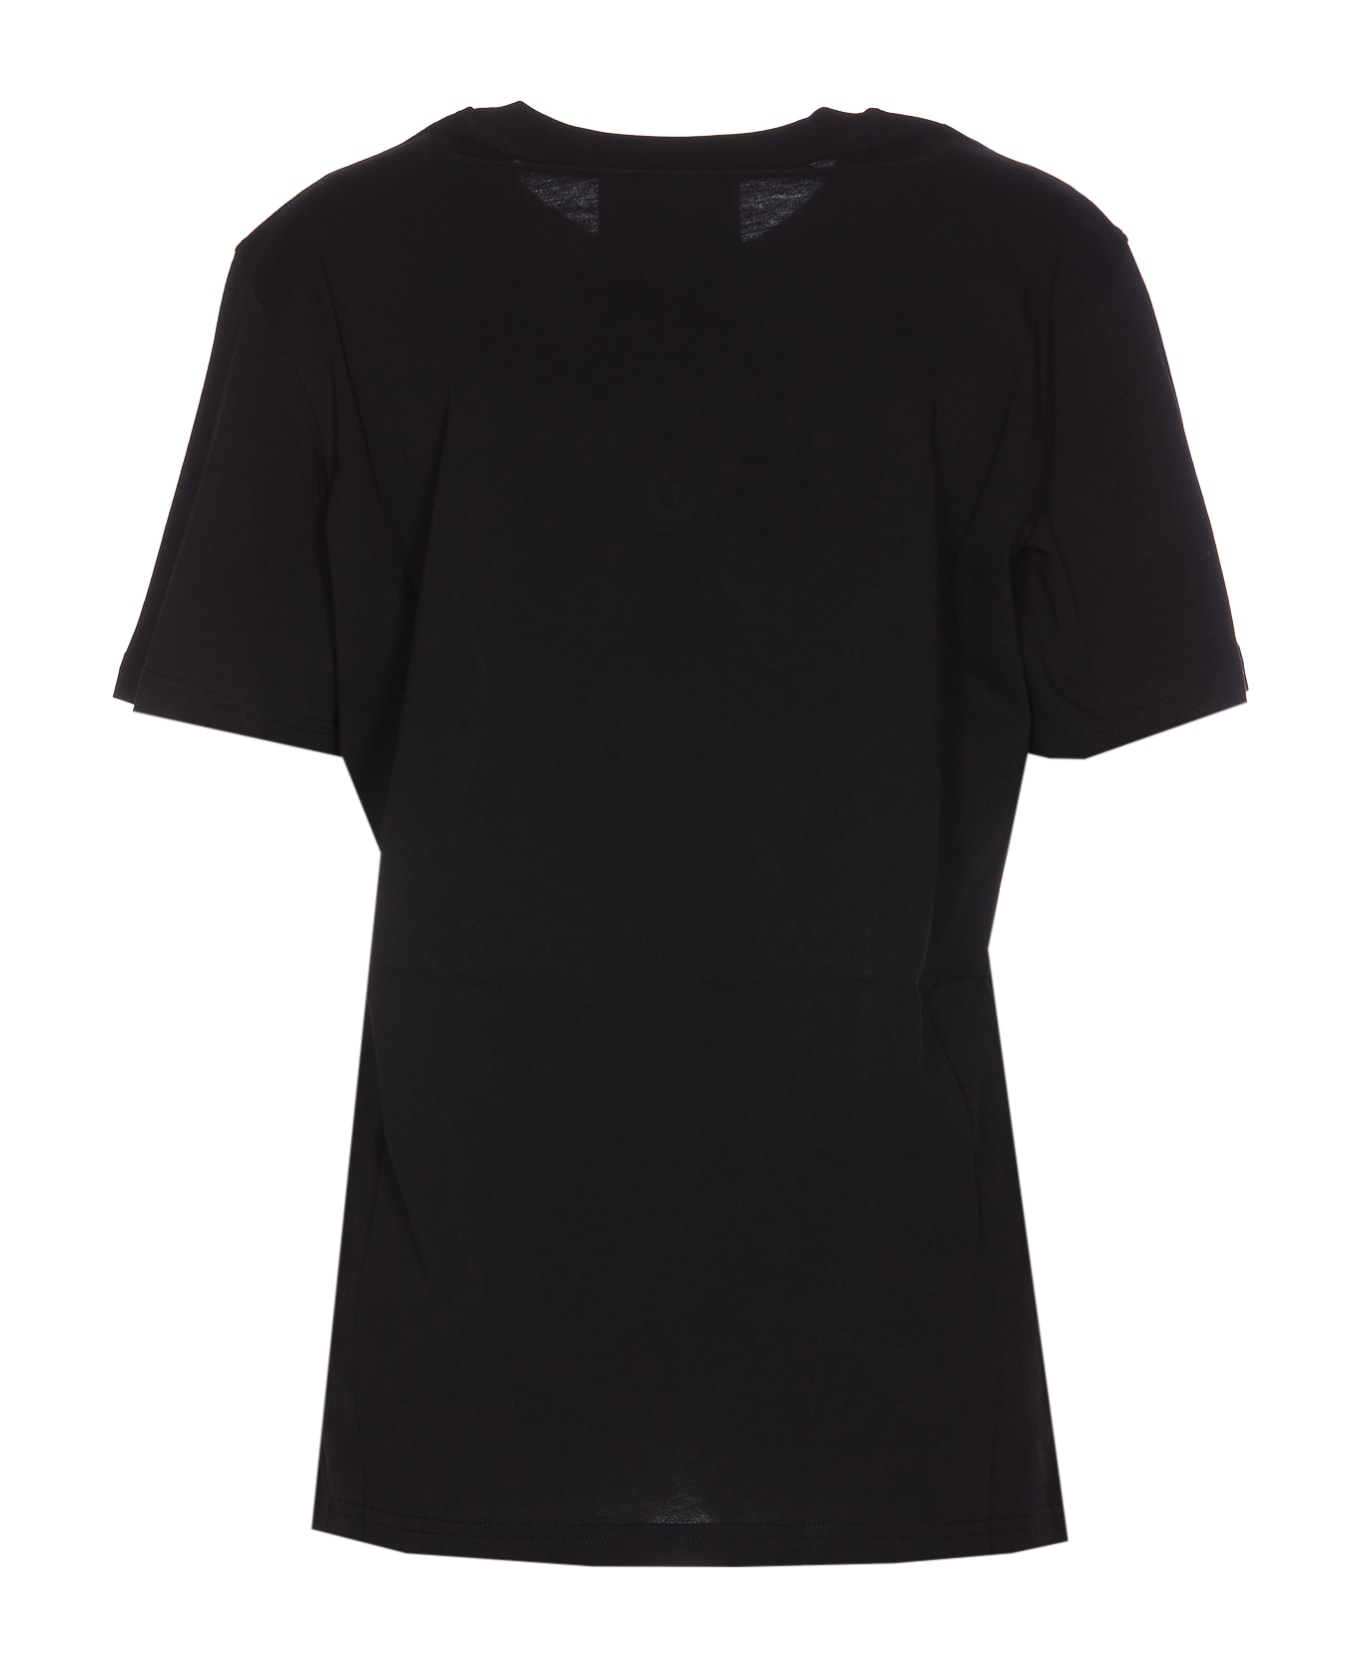 Moschino Love We Trust T-shirt - Black Tシャツ